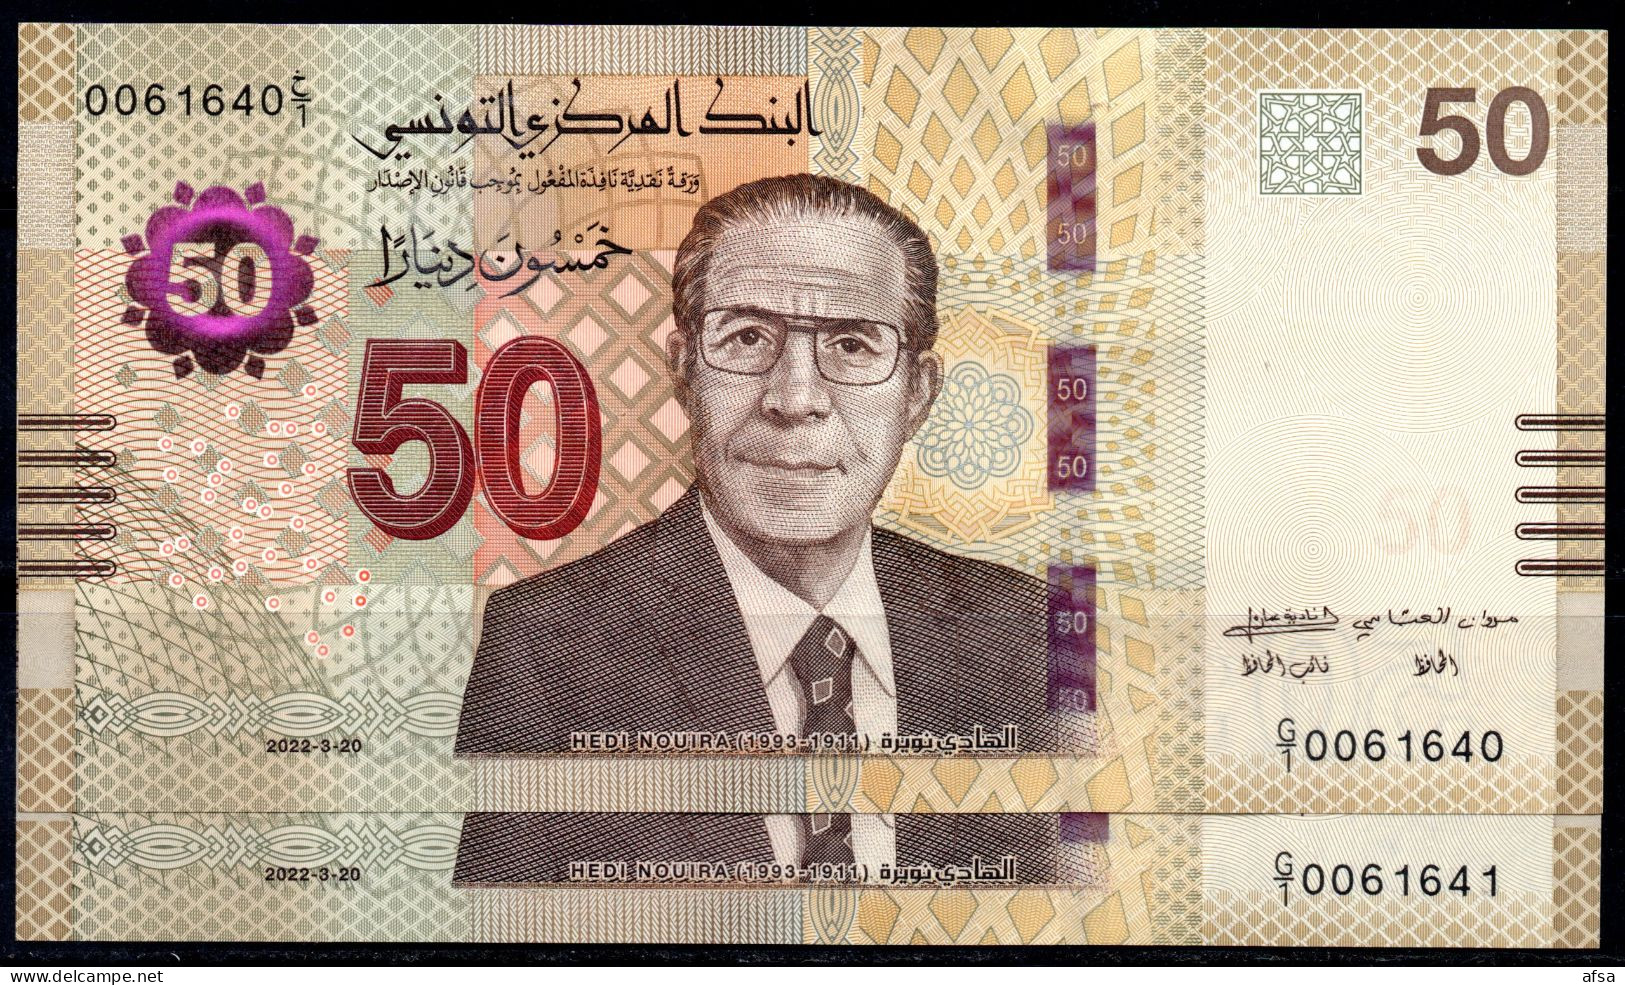 2 Banknotes Of 50 Dinars  2022 UNC** (FREE SHIPPING) //2 Billets De 50 Dinars 2022 Neufs** (ENVOI GRATUIT) - Tunisia